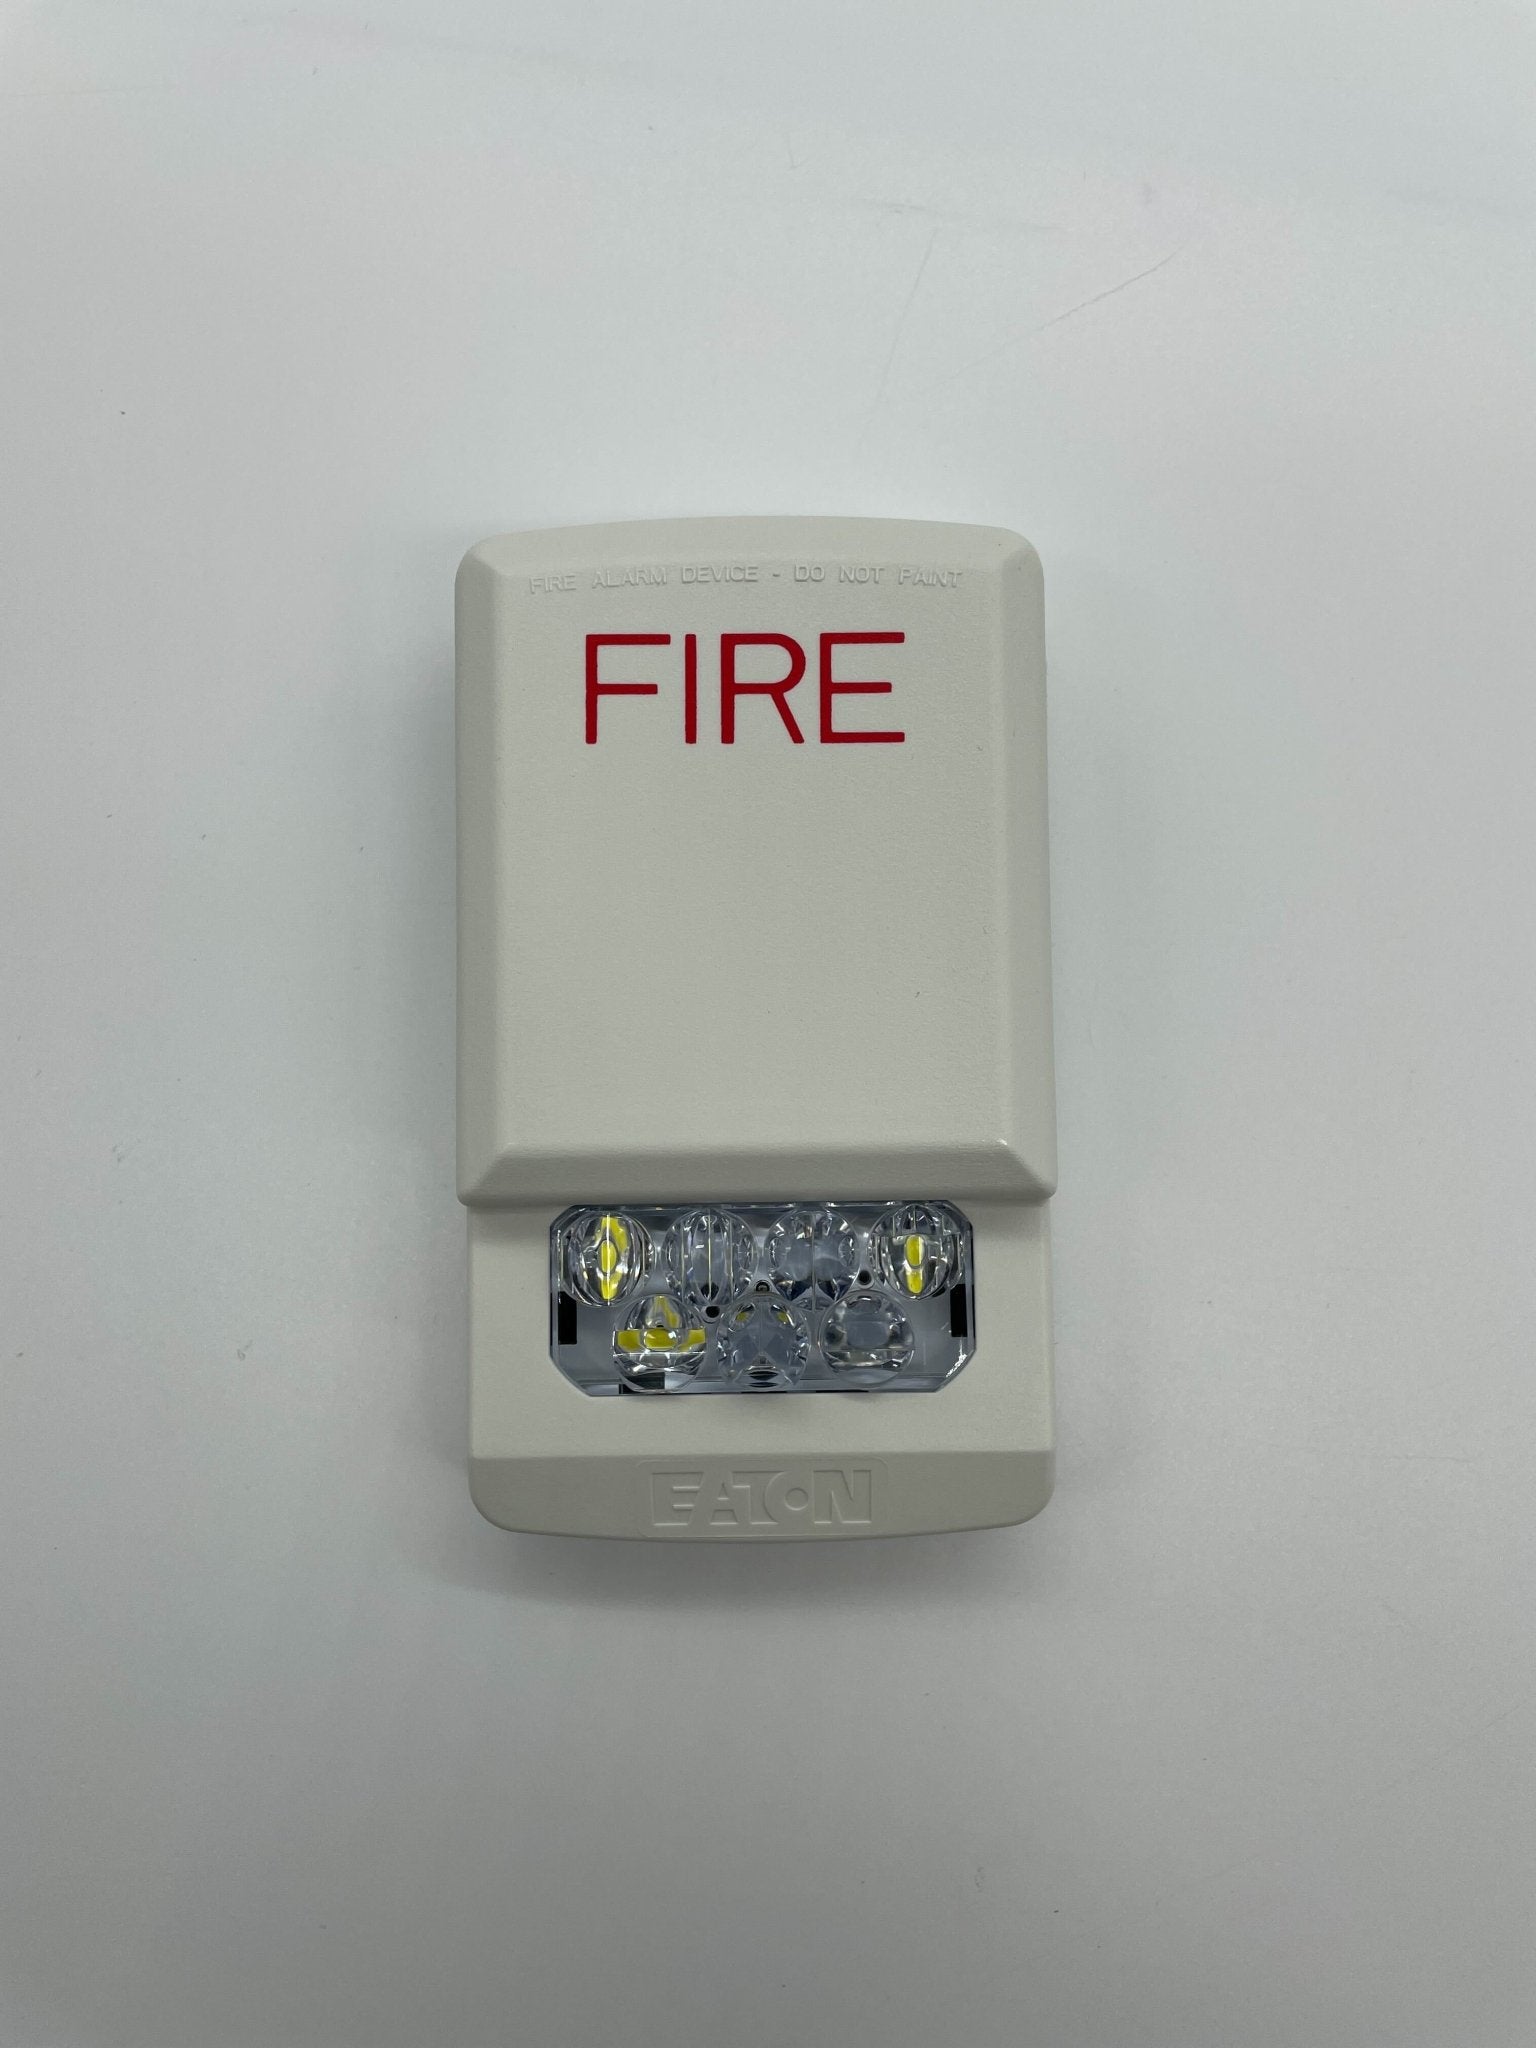 Wheelock ELSTW - The Fire Alarm Supplier